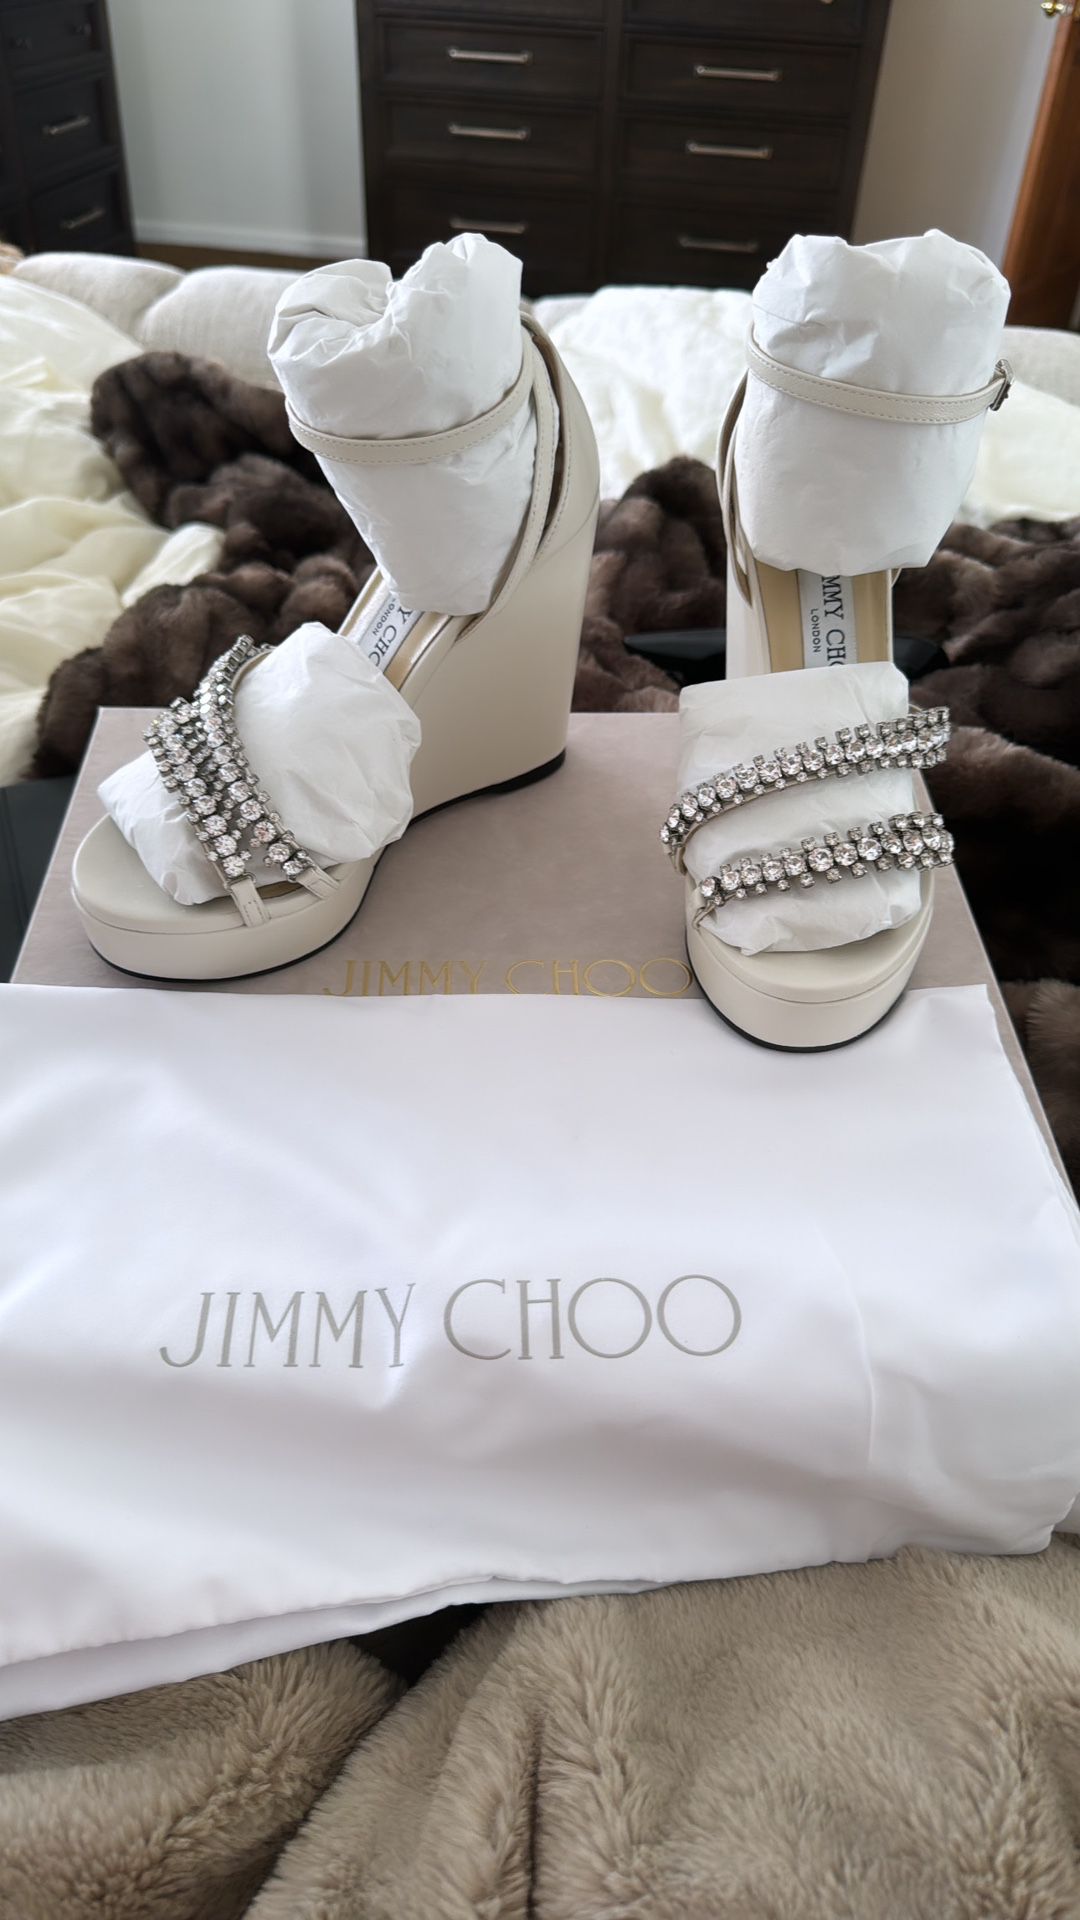 Jimmy Choo Heels